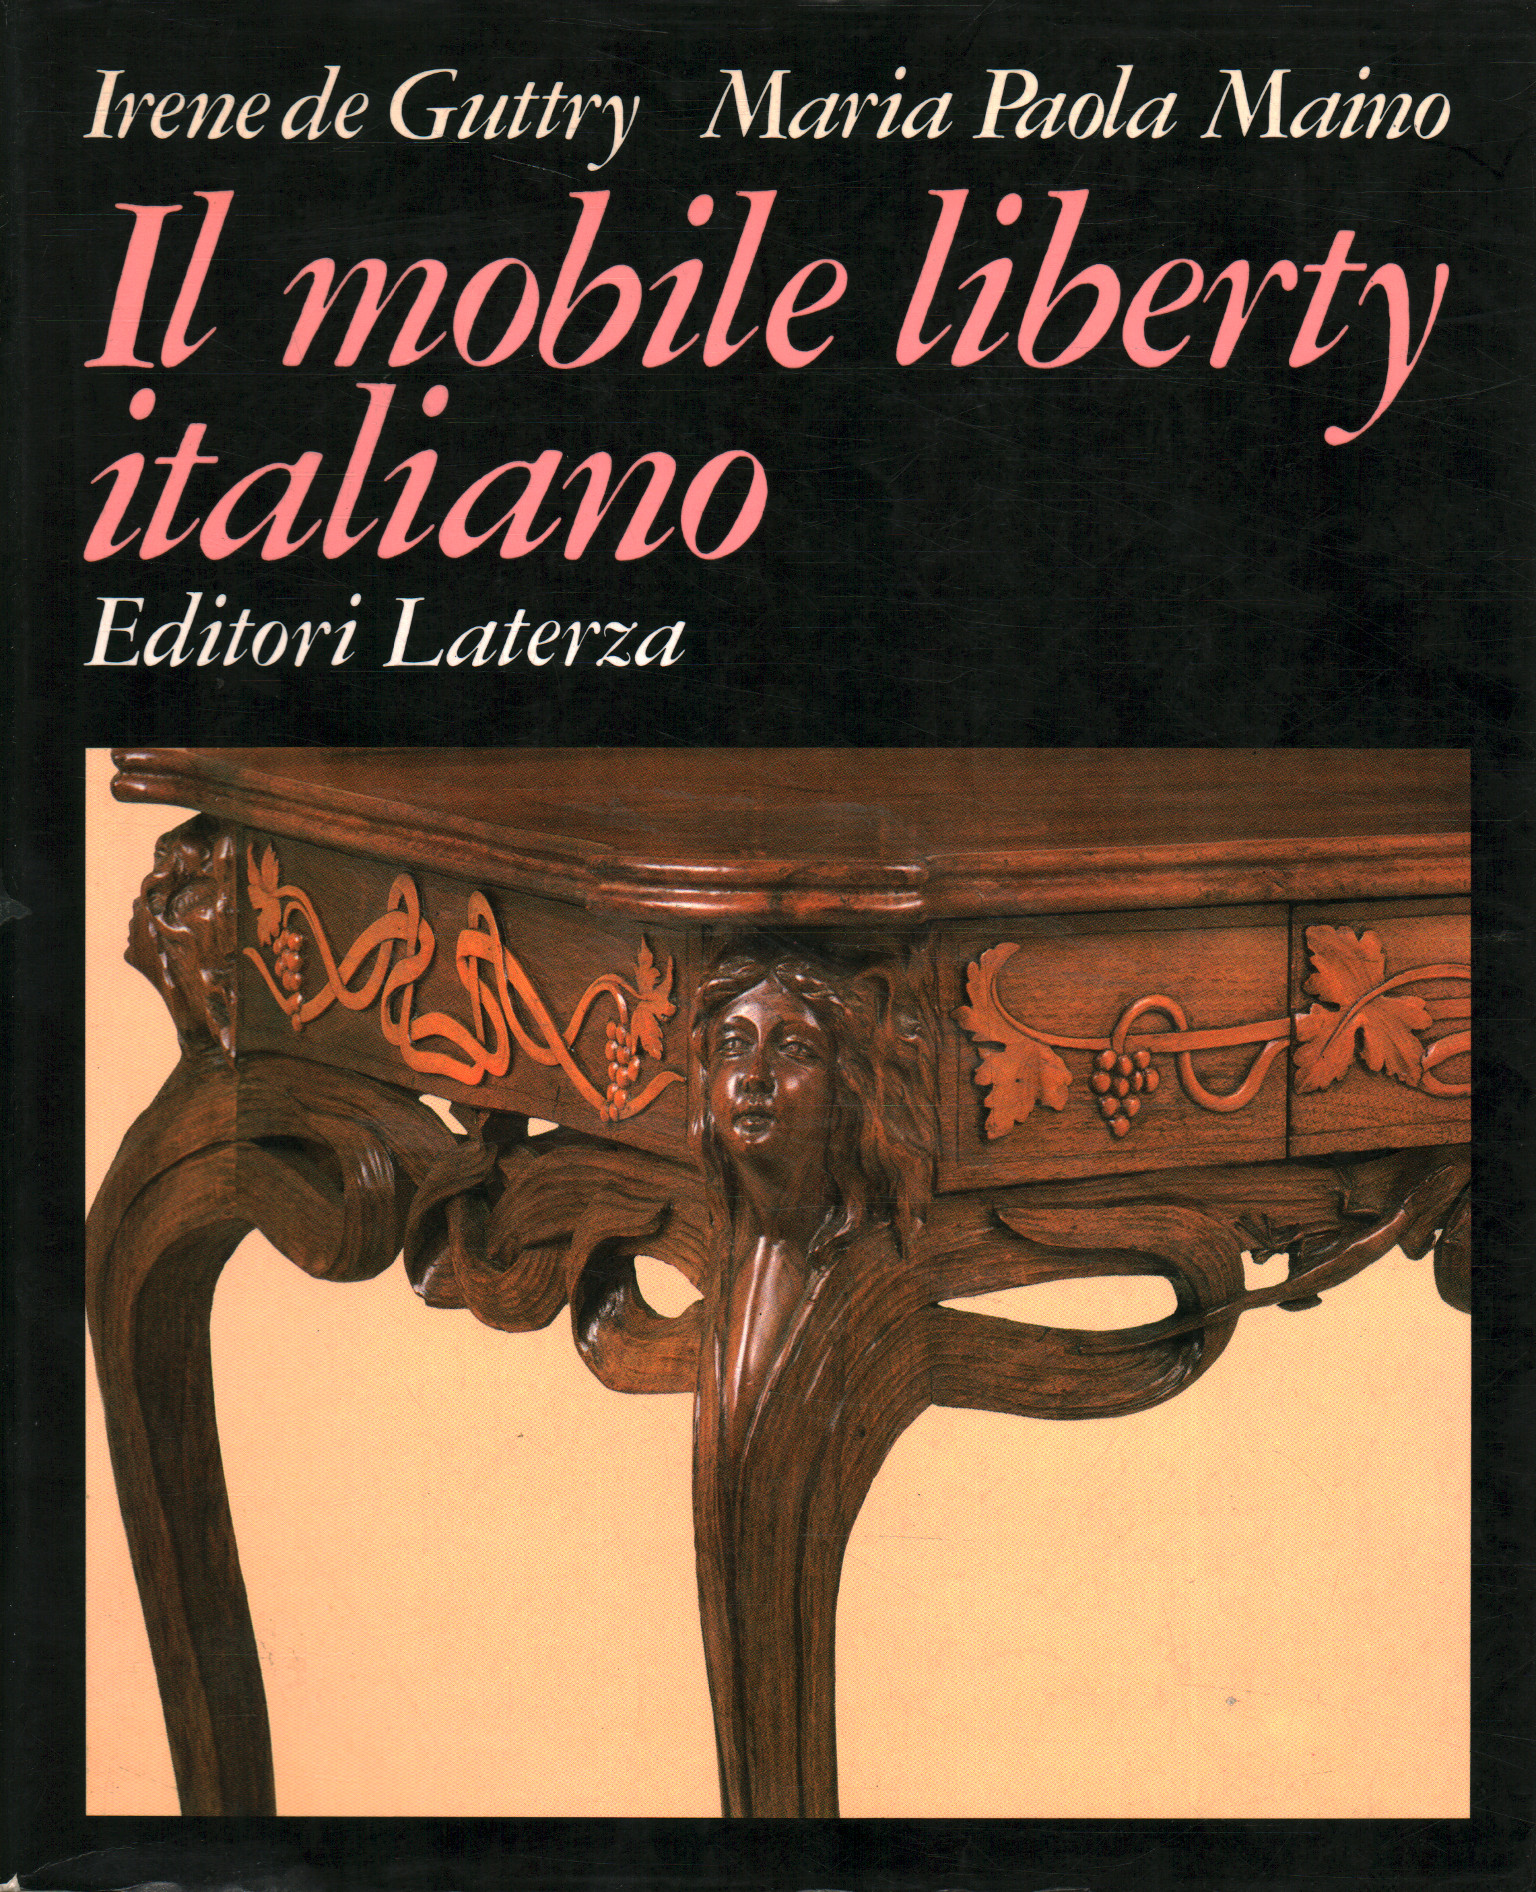 Les meubles liberty italiens